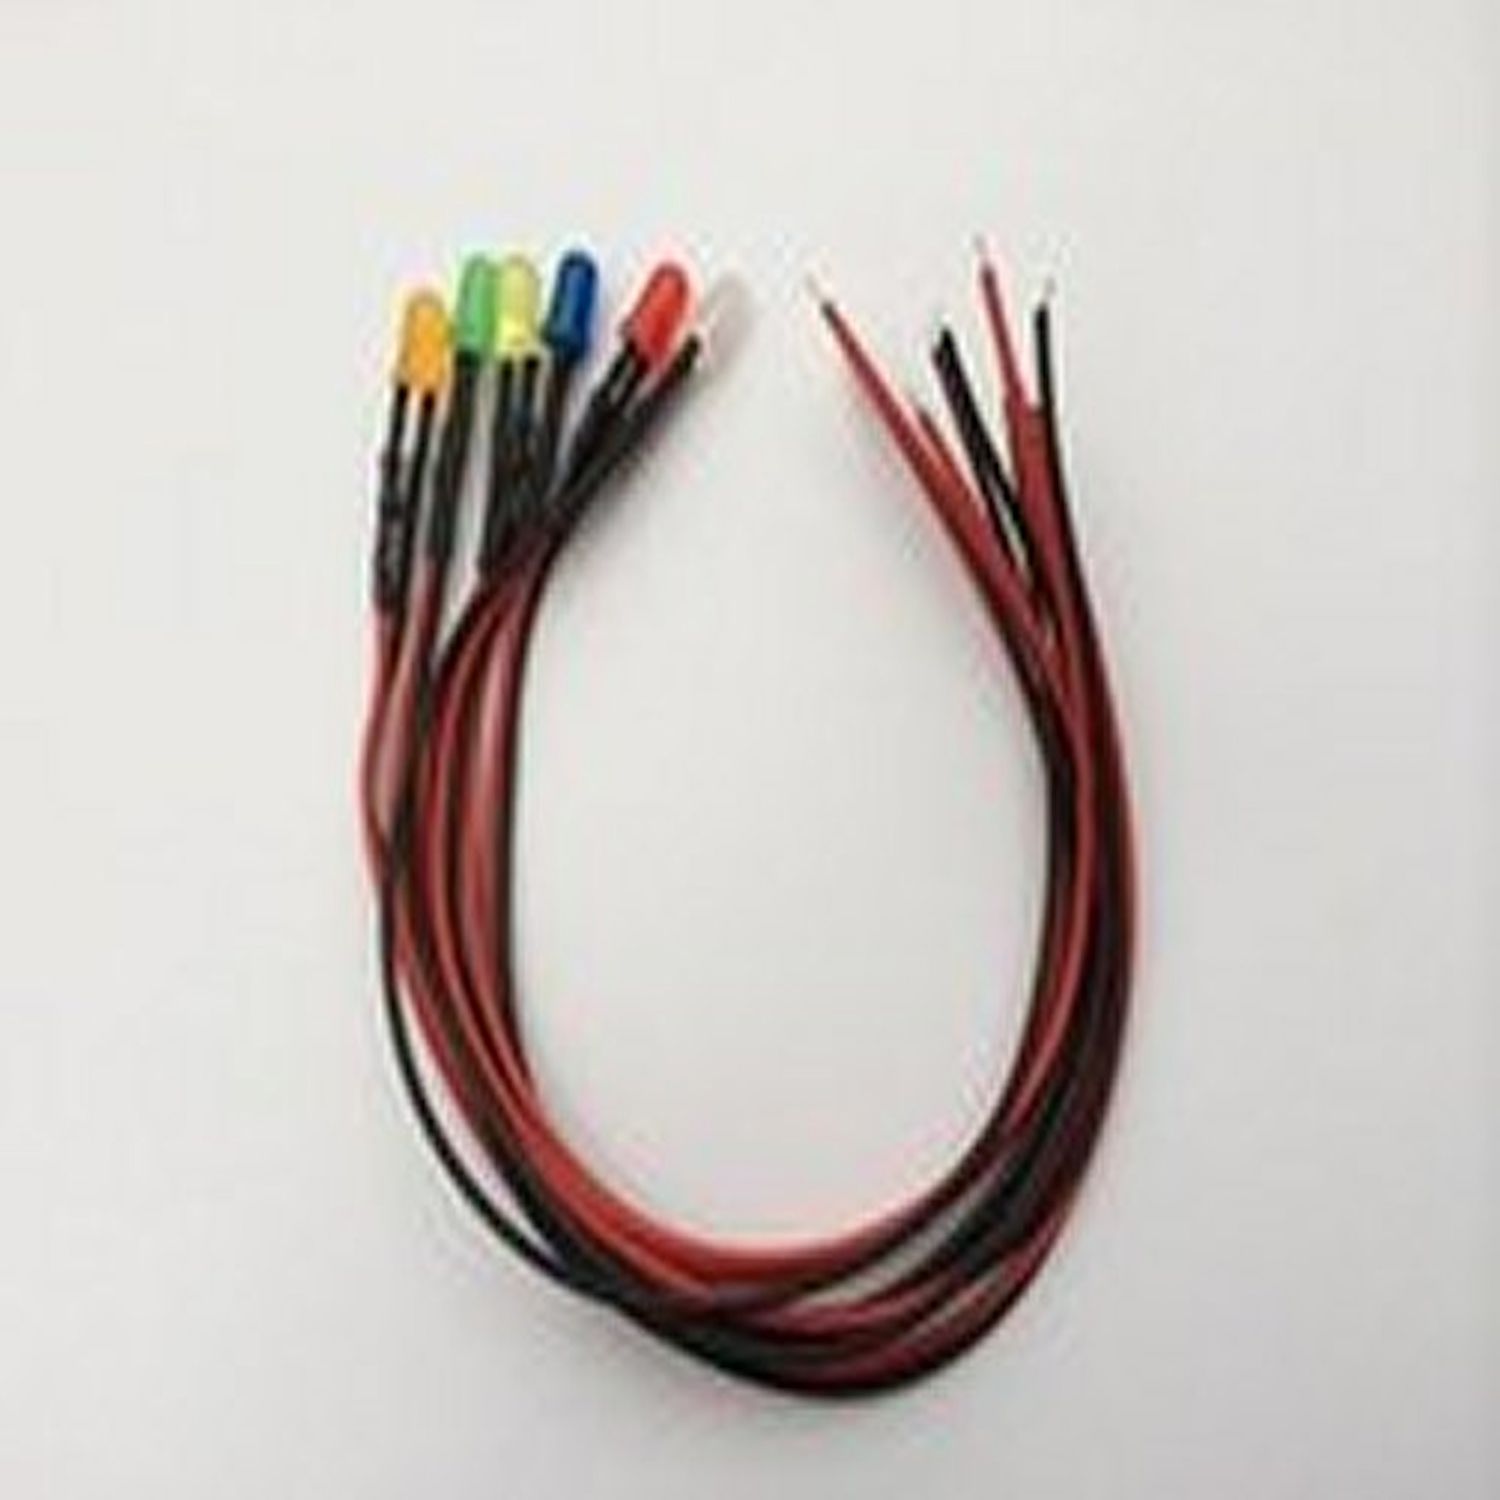 3mm Flashing LEDs - 12 volt DC (Red)